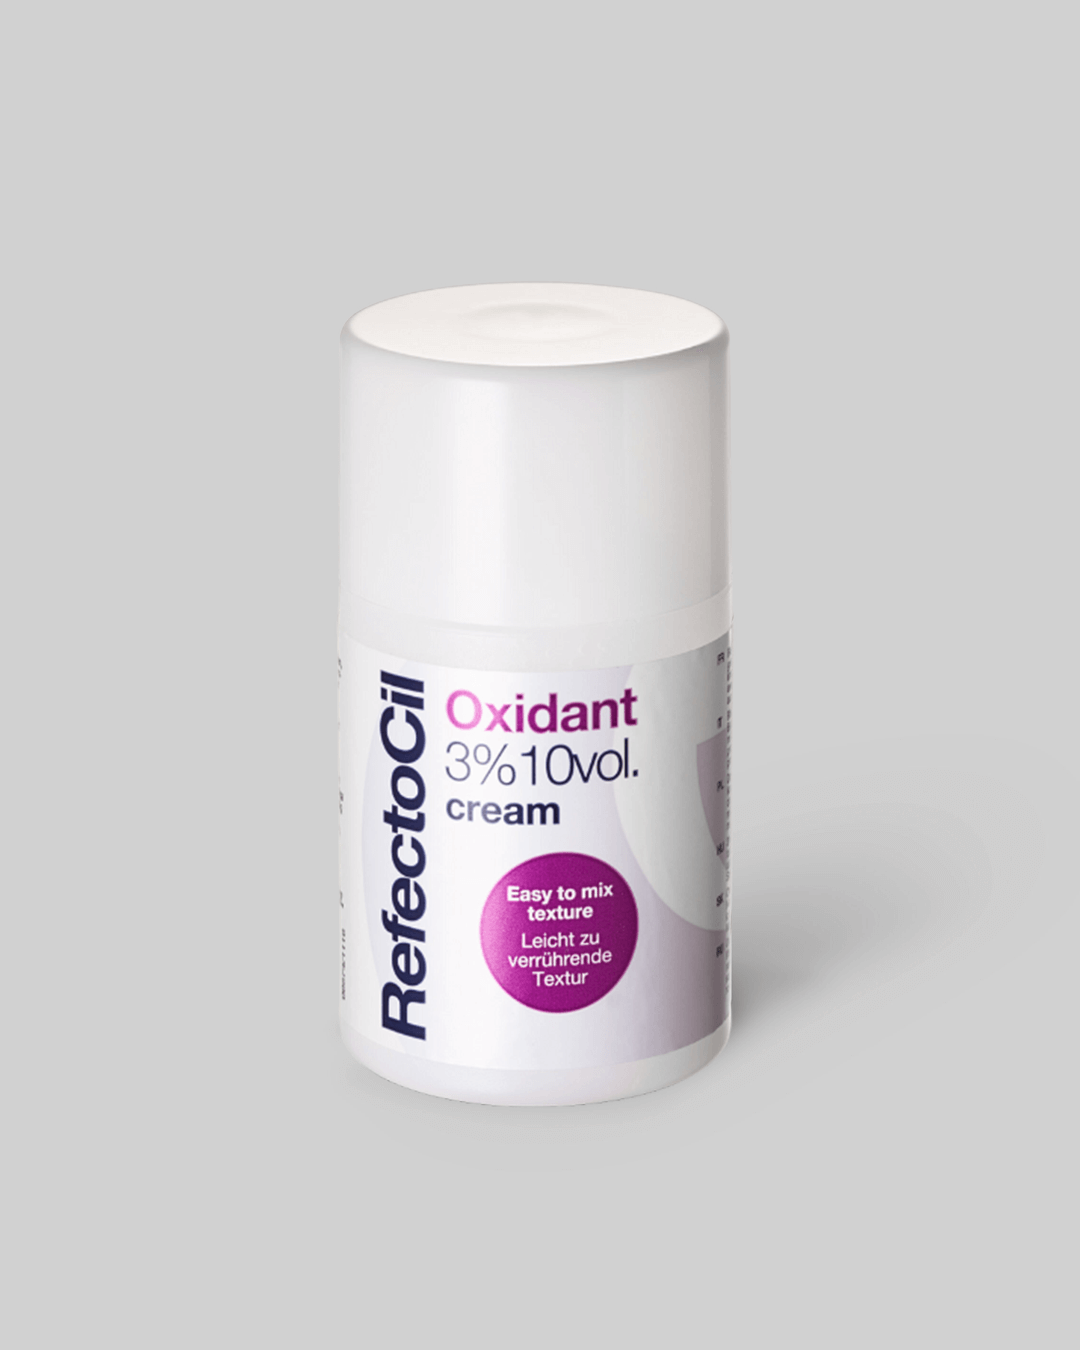 RefectoCil - Oxidant Creme 3% 100ml